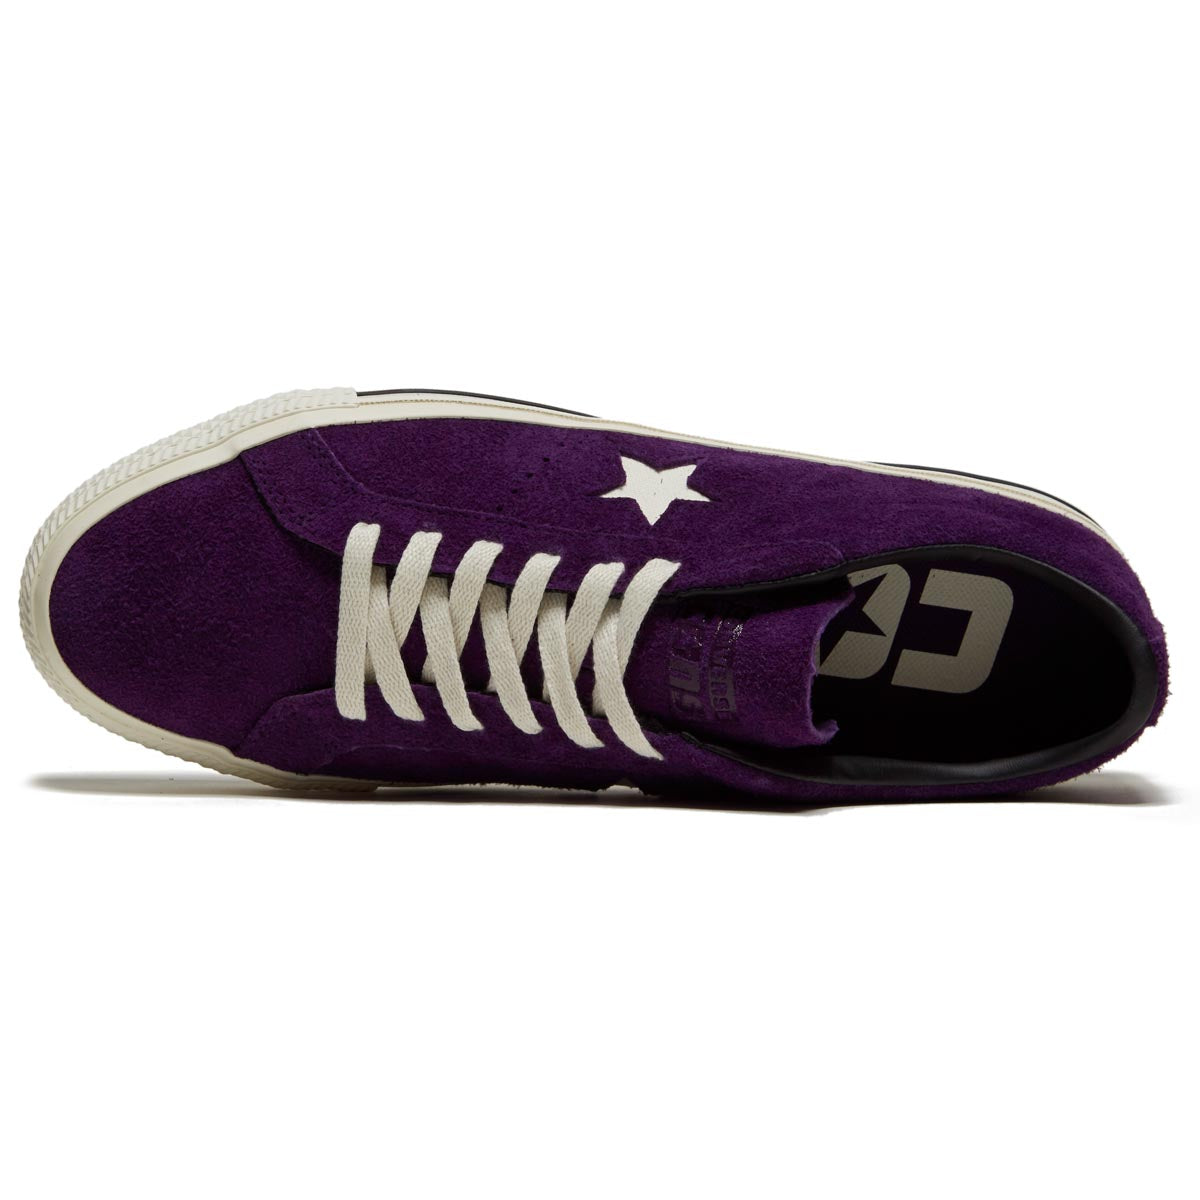 Converse One Star Pro Ox Shoes - Night Purple/Egret/Black – CCS